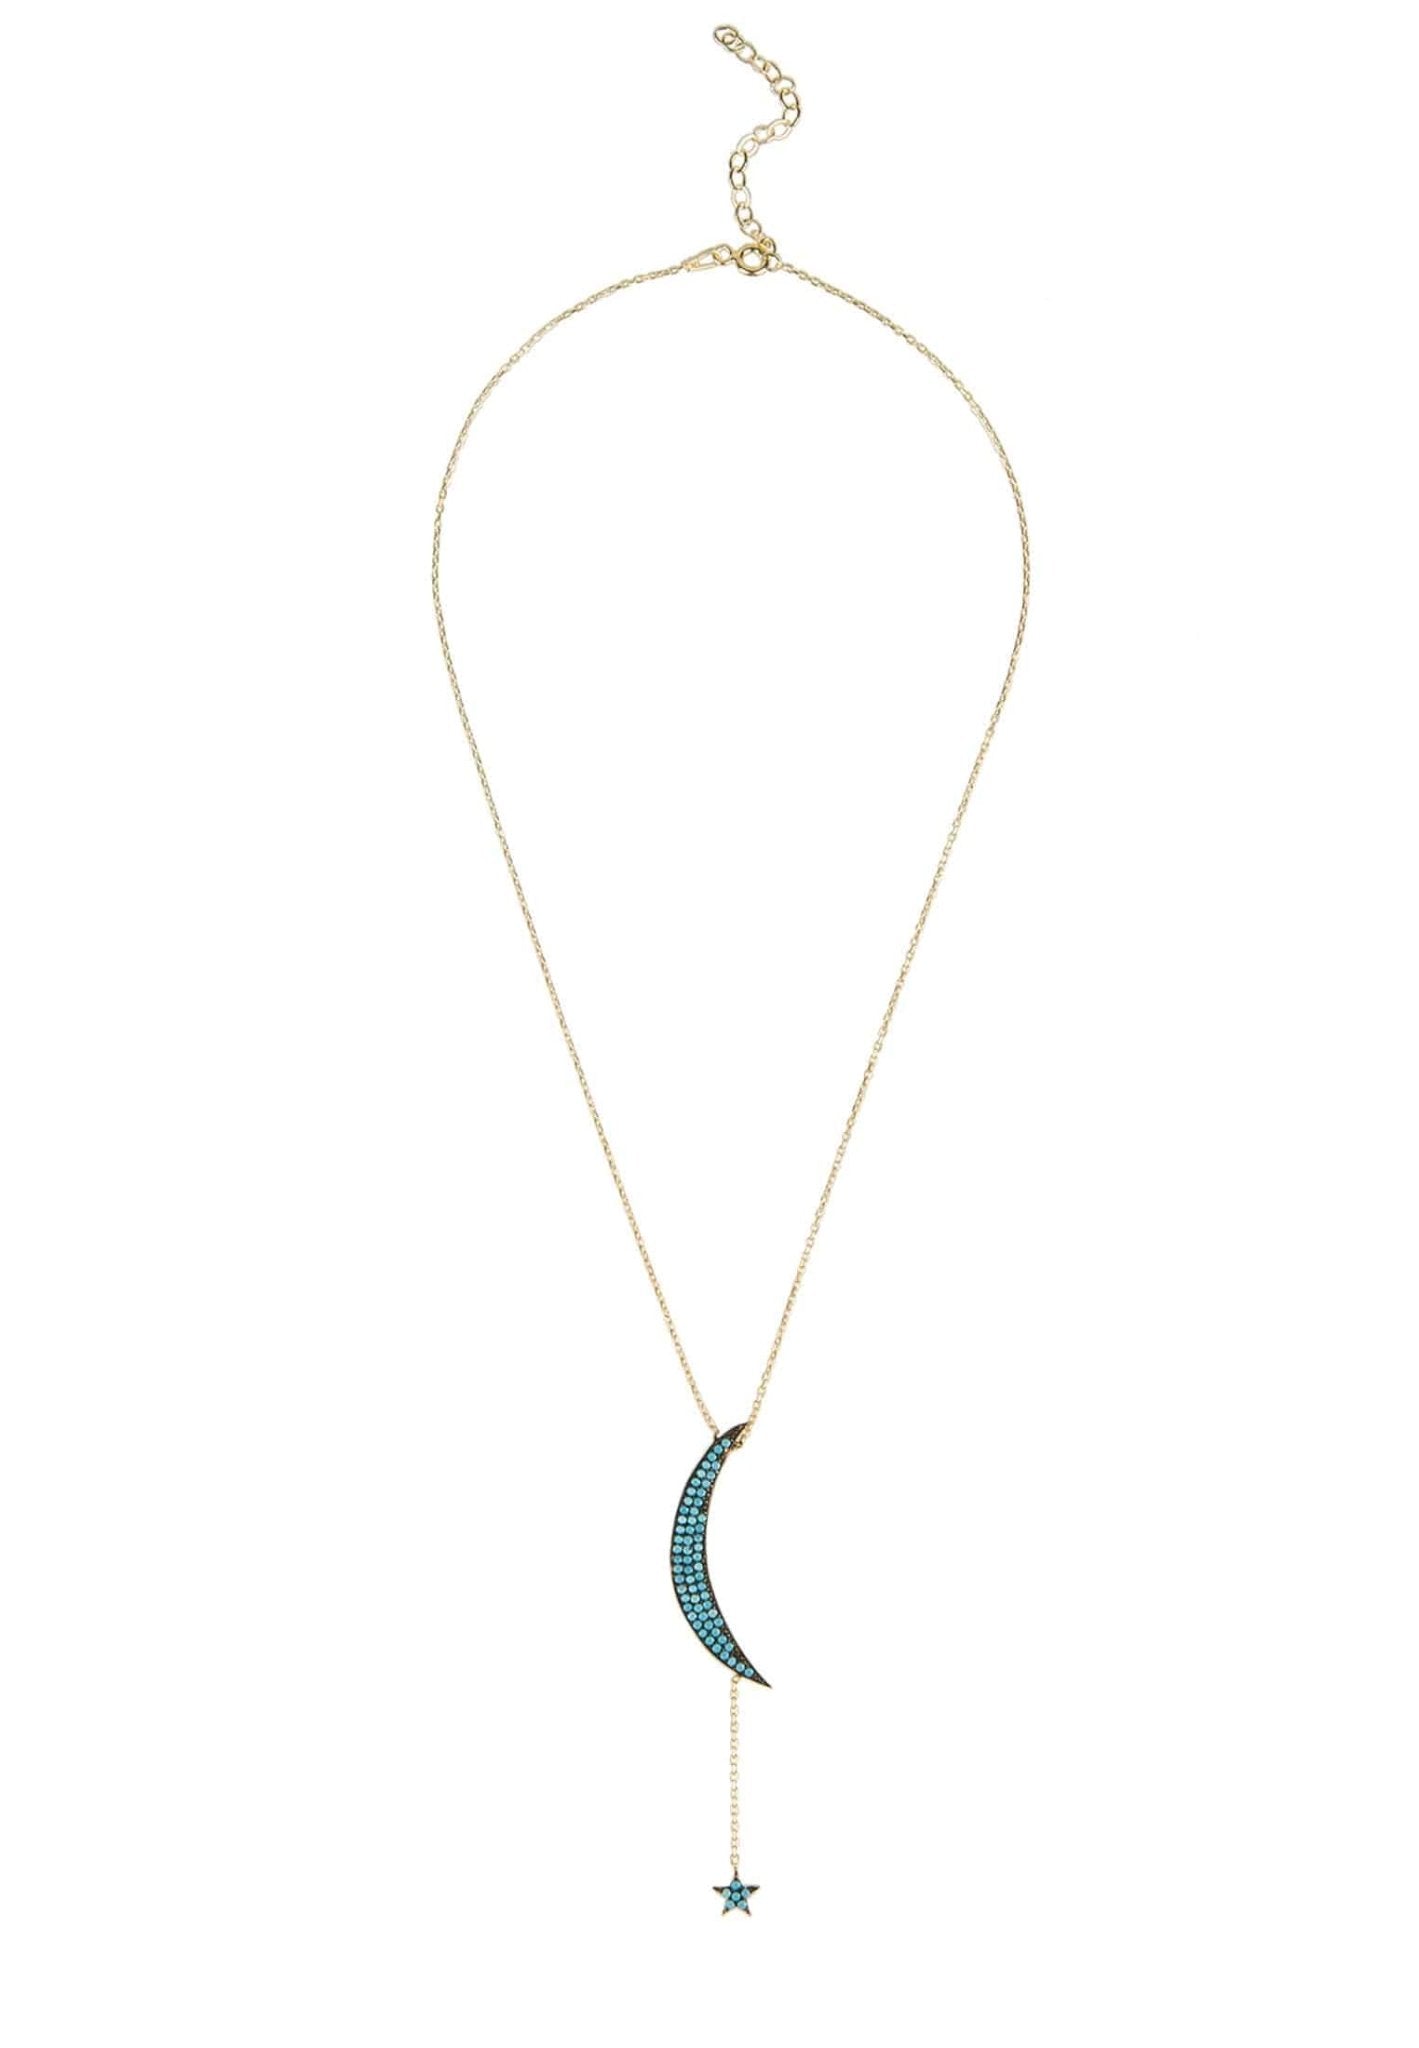 Moon & Star Large Pendant Necklace Blue Turquoise Rosegold - LATELITA Necklaces